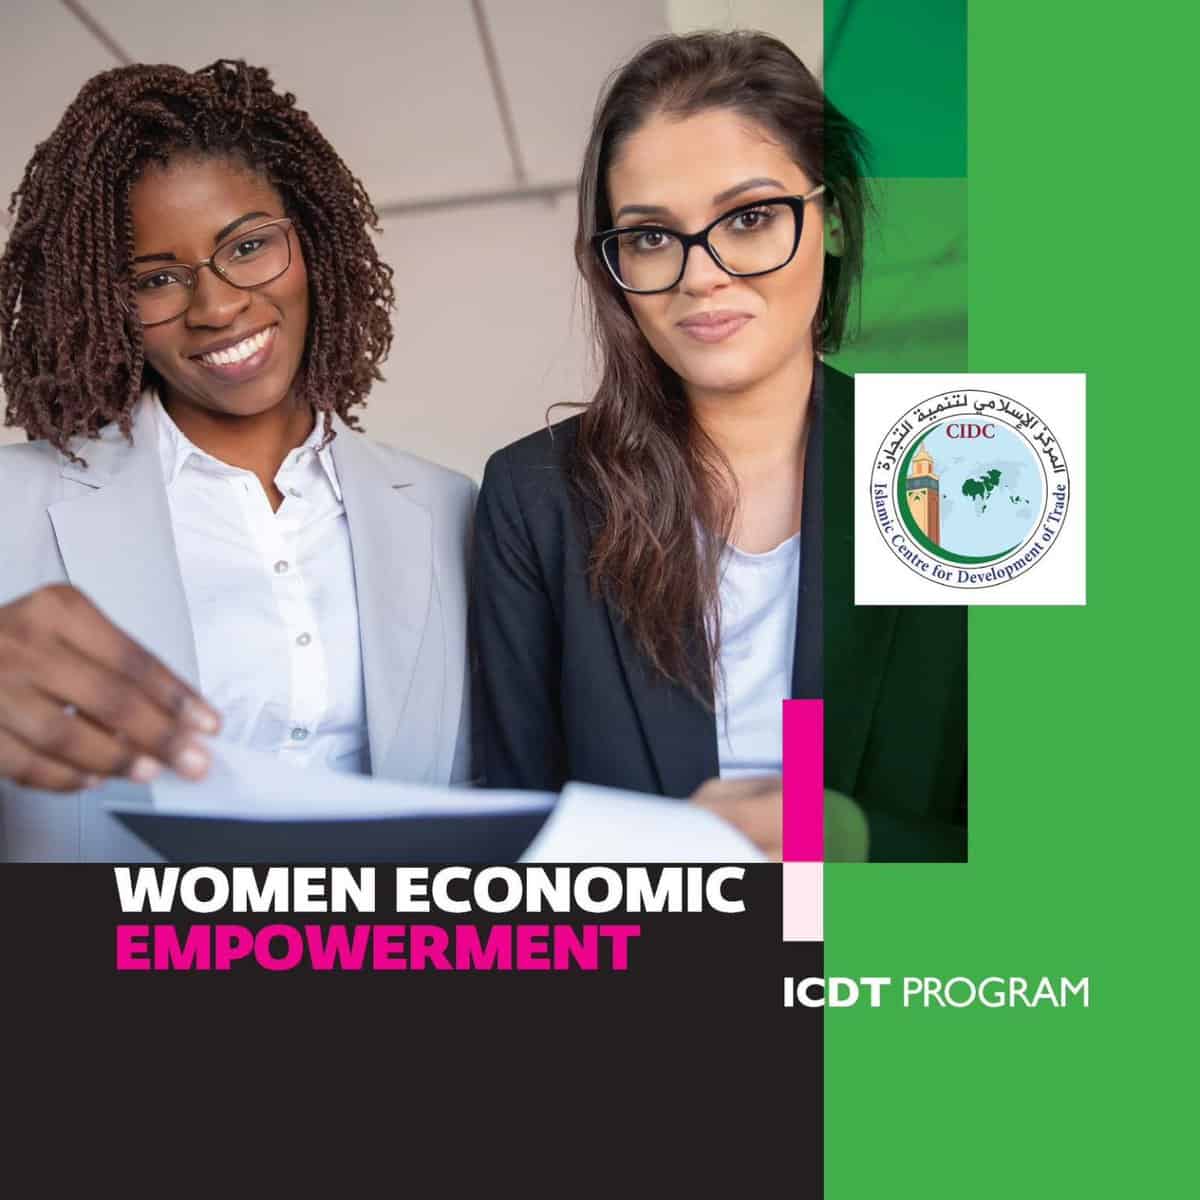 Launching of ICDT’s Program on Women’s Economic Empowerment in Sub-Saharan Africa